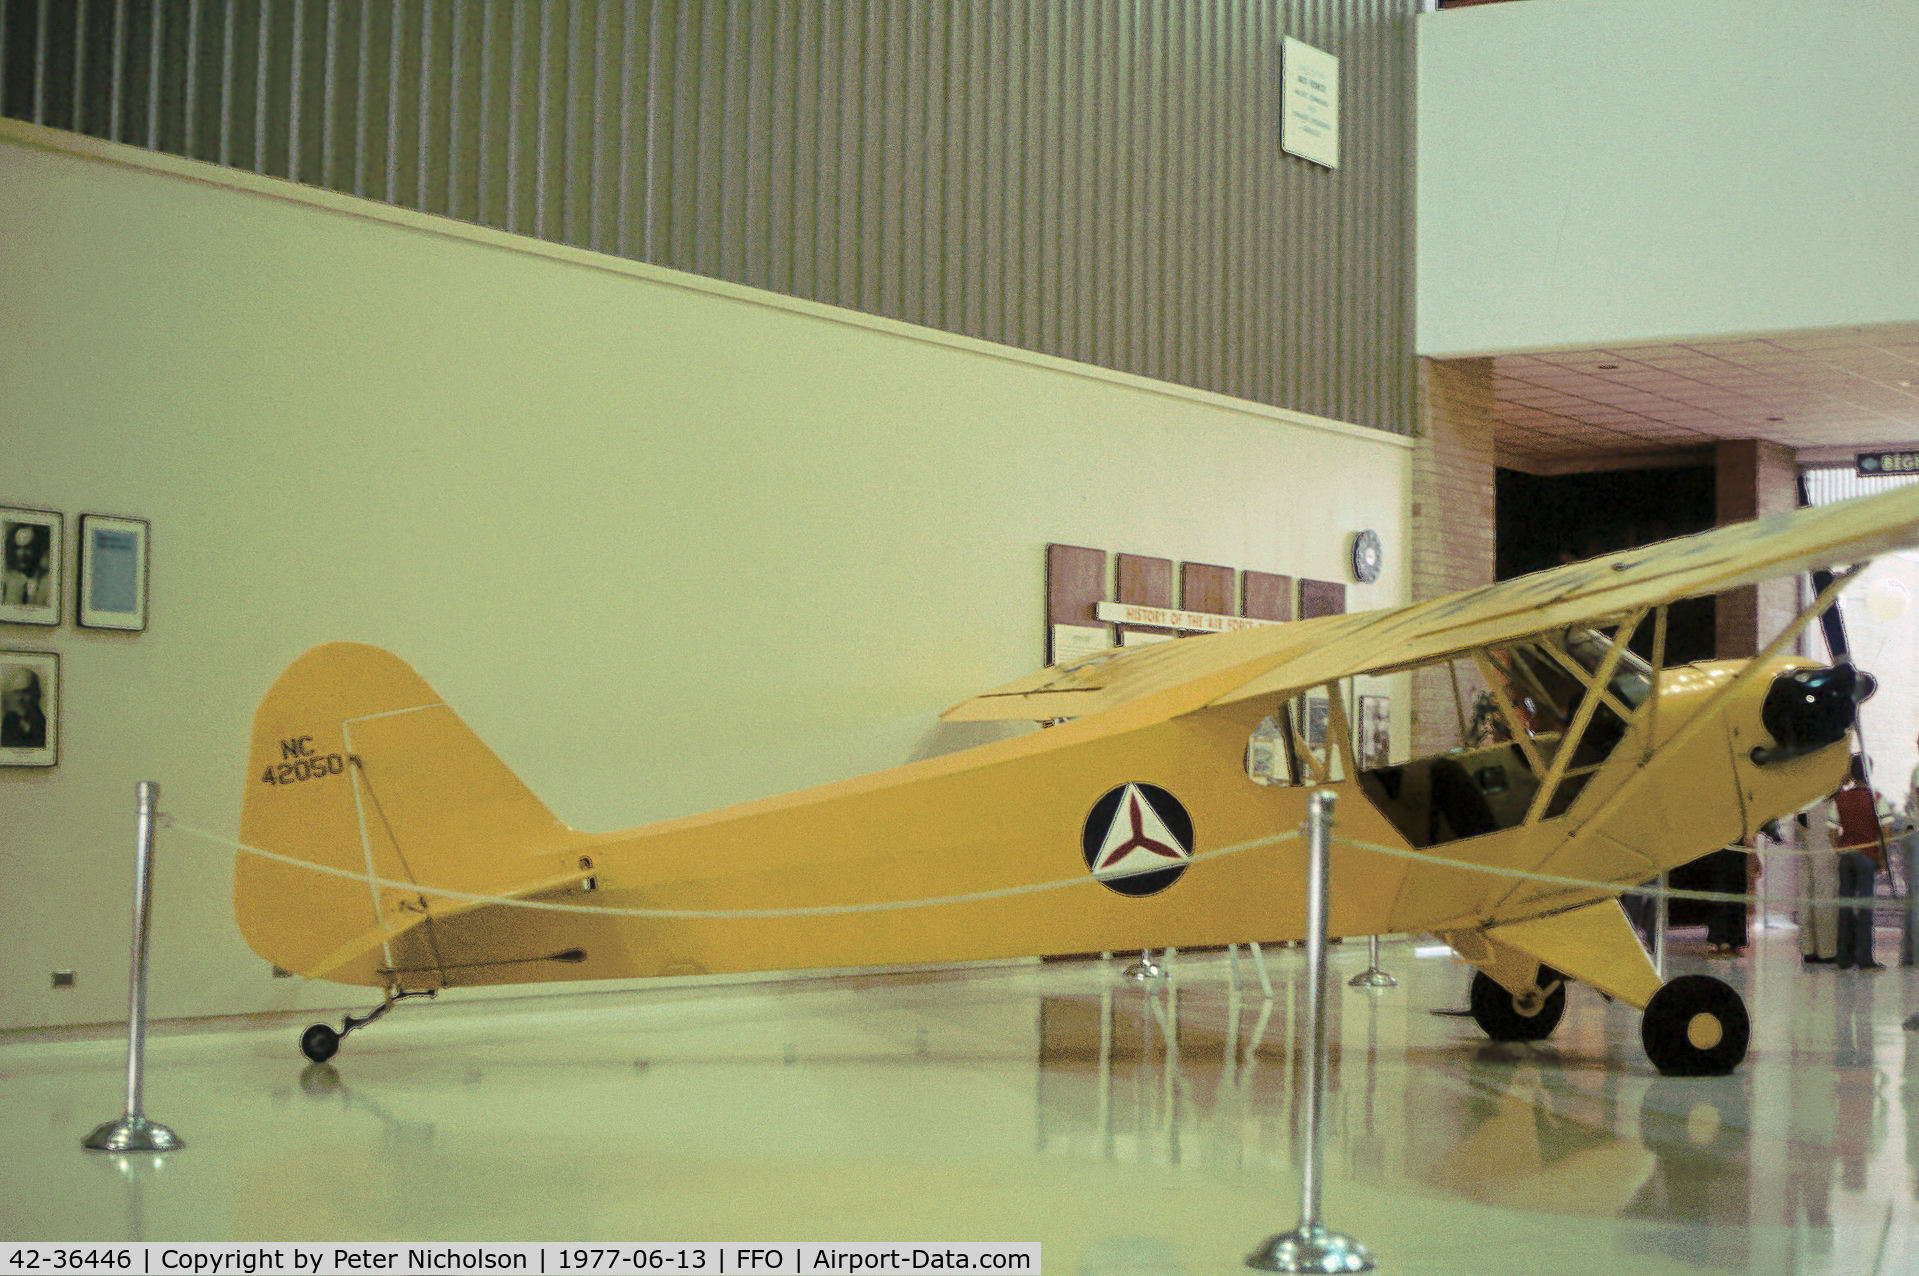 42-36446, 1943 Piper L-4A Grasshopper (O-59A / J3C-65) C/N 8570, L-4A Grasshopper in Civil Air Patrol markings as NC42050 as seen at the USAF Museum in the Summer of 1977.